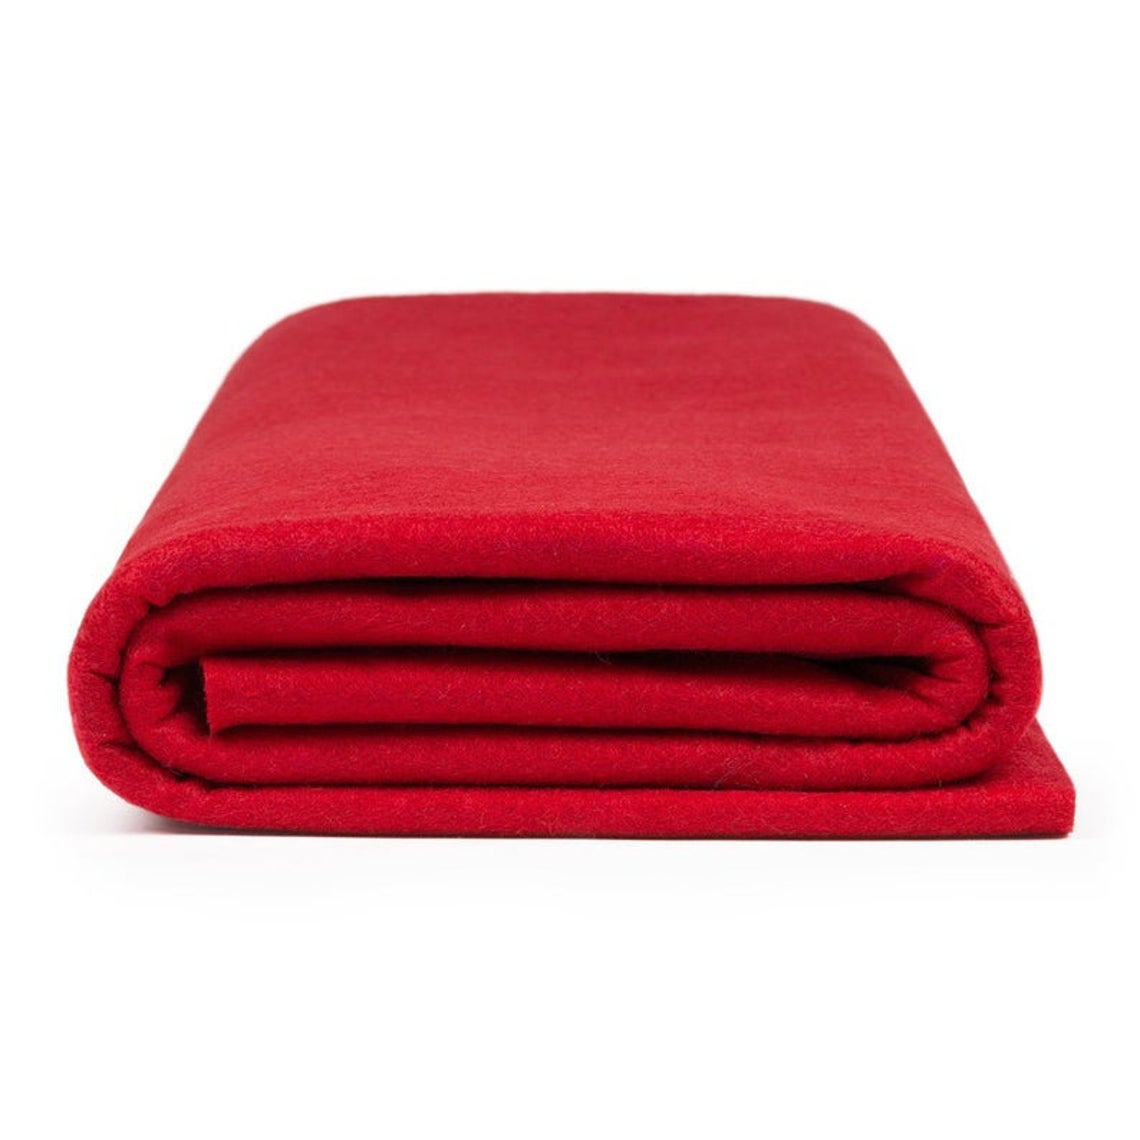 Acrylic Felt Fabric By The Roll | 20 yards | Wholesale Fabric ICE FABRICS  Red